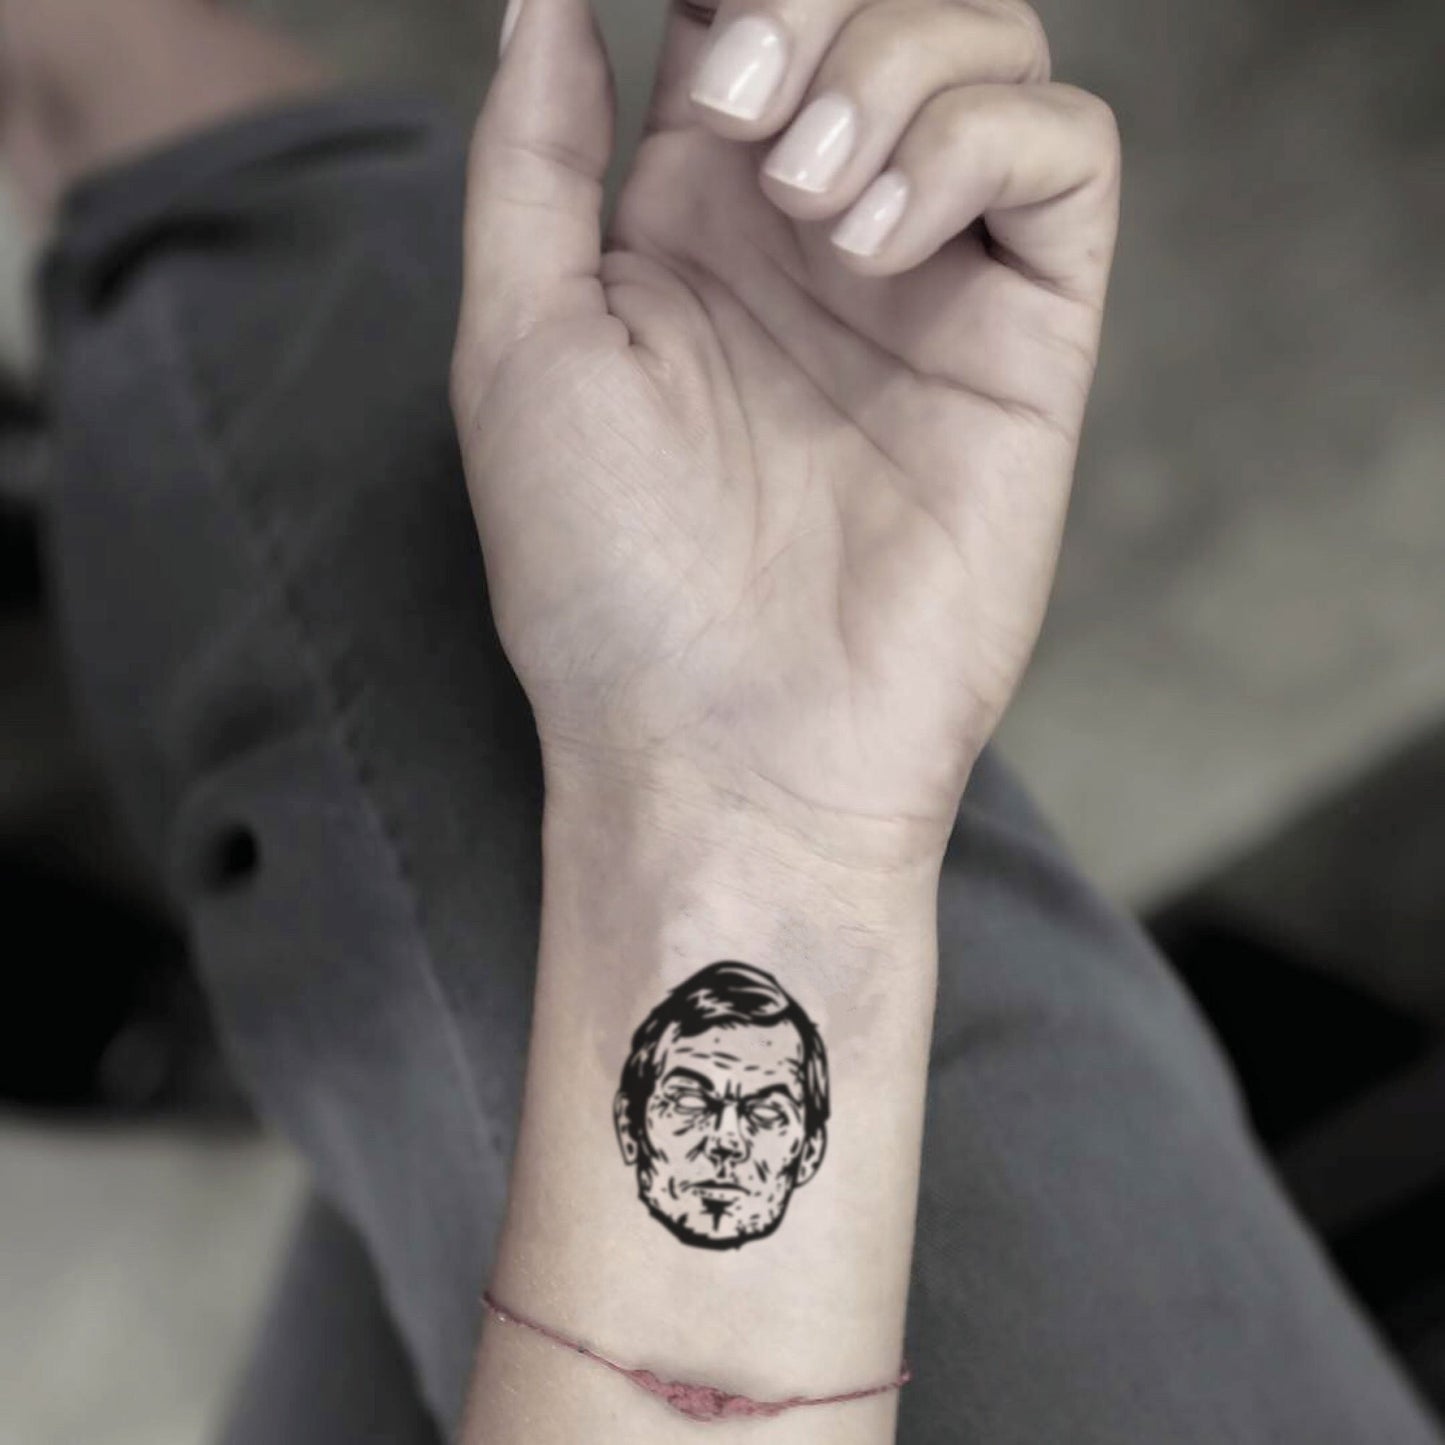 fake small jeffrey dahmer portrait temporary tattoo sticker design idea on wrist